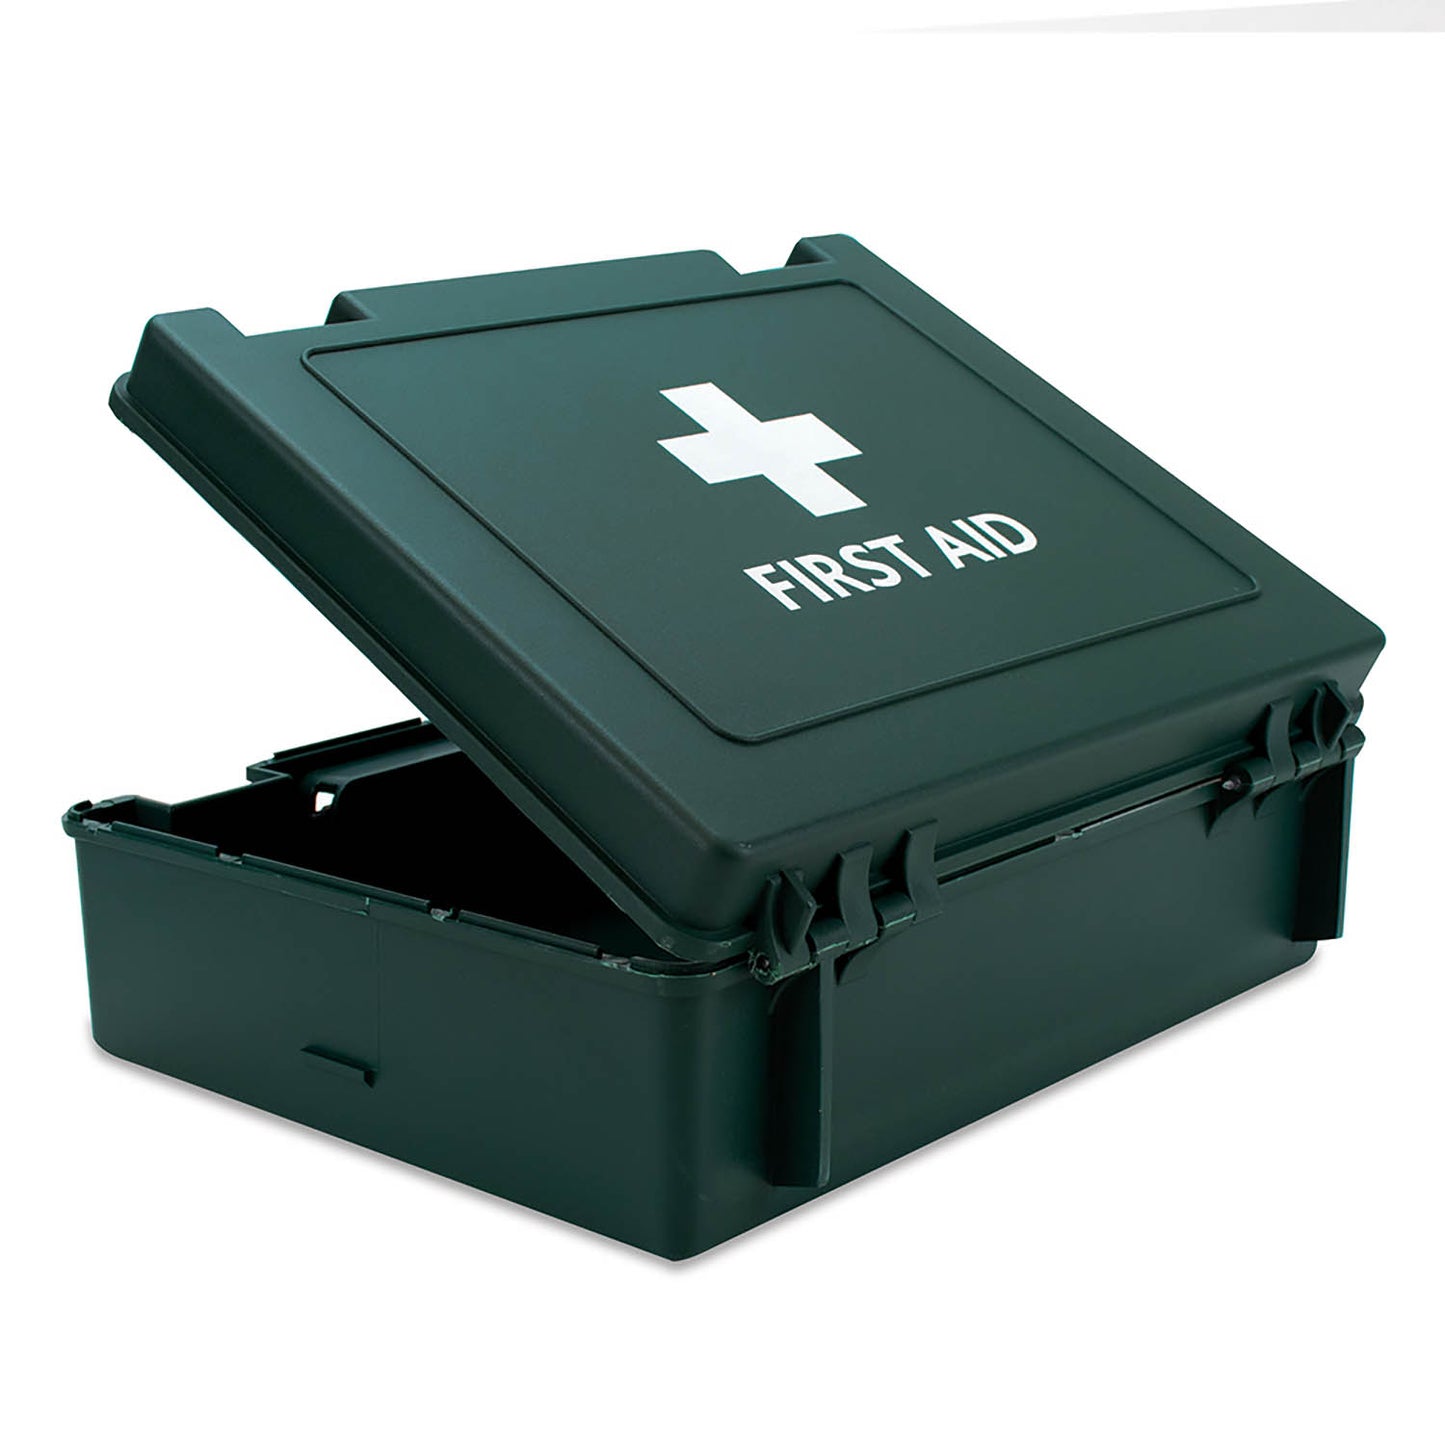 Oxford Economy Empty First Aid Box - 22.5 x 27.5 x 9cm